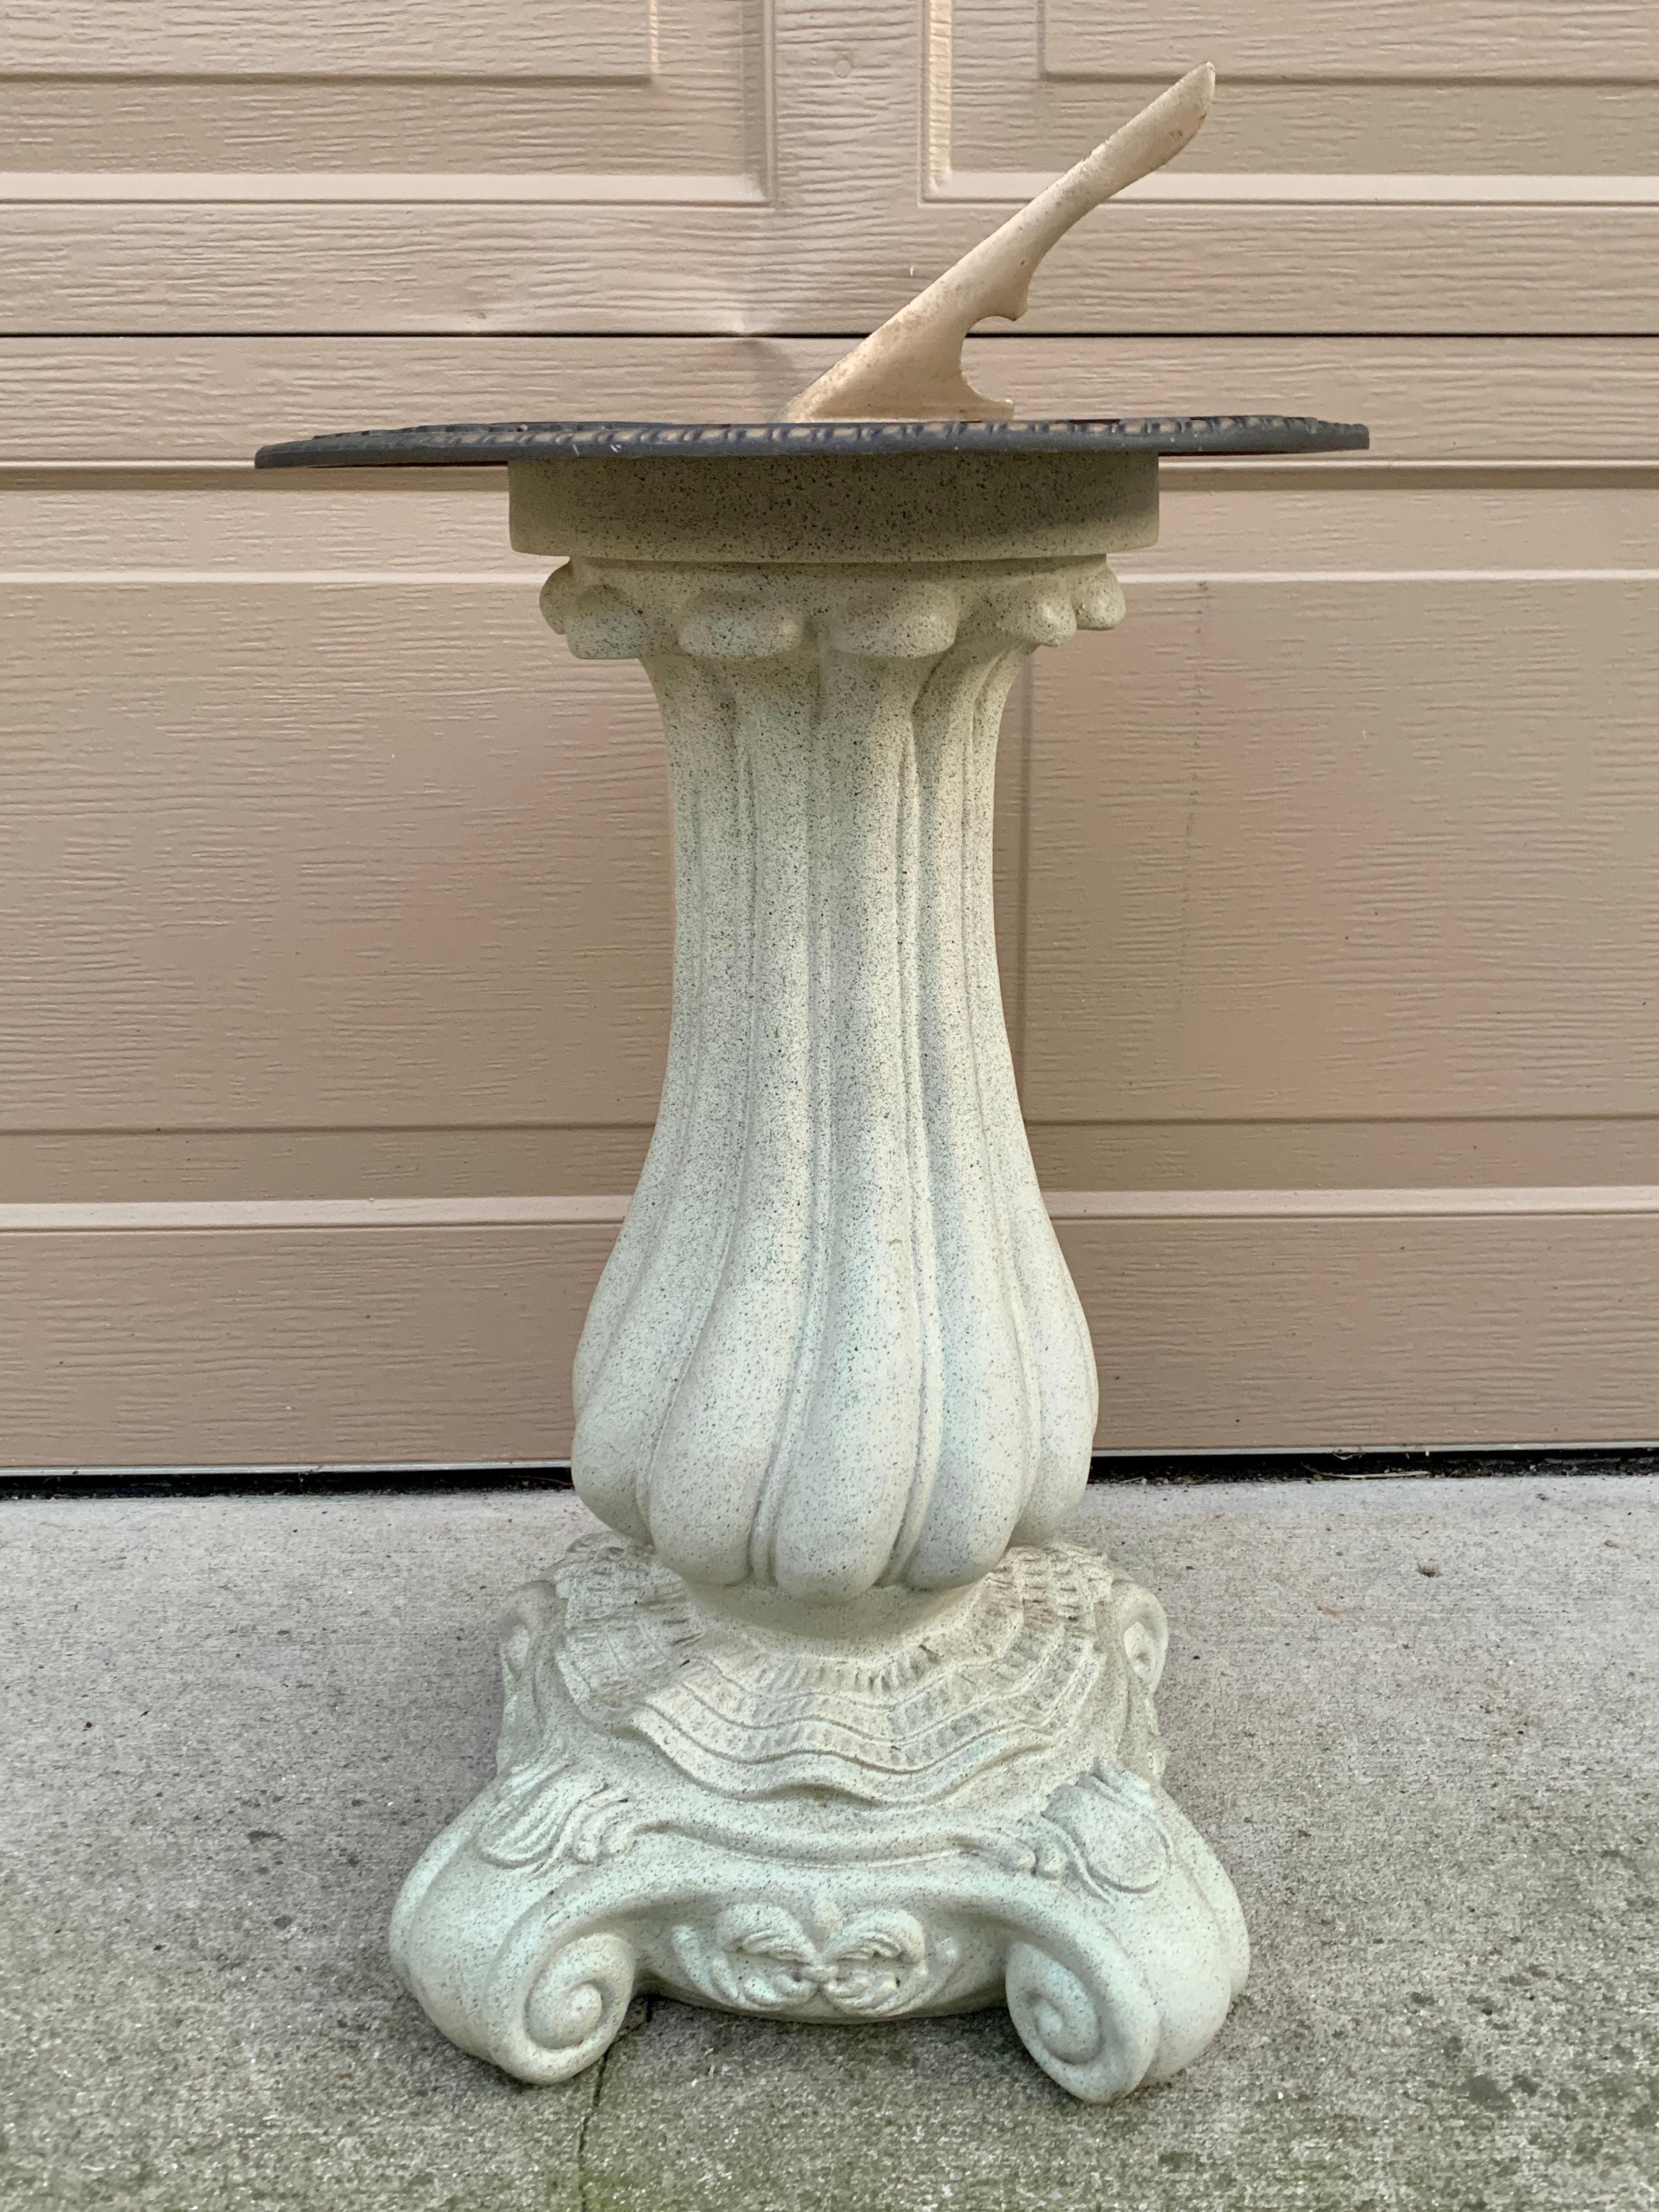 A stunning vintage garden sundial on column pedestal

USA, Late 20th Century

Metal armillary, atop cast resin pedestal

Measures: 14